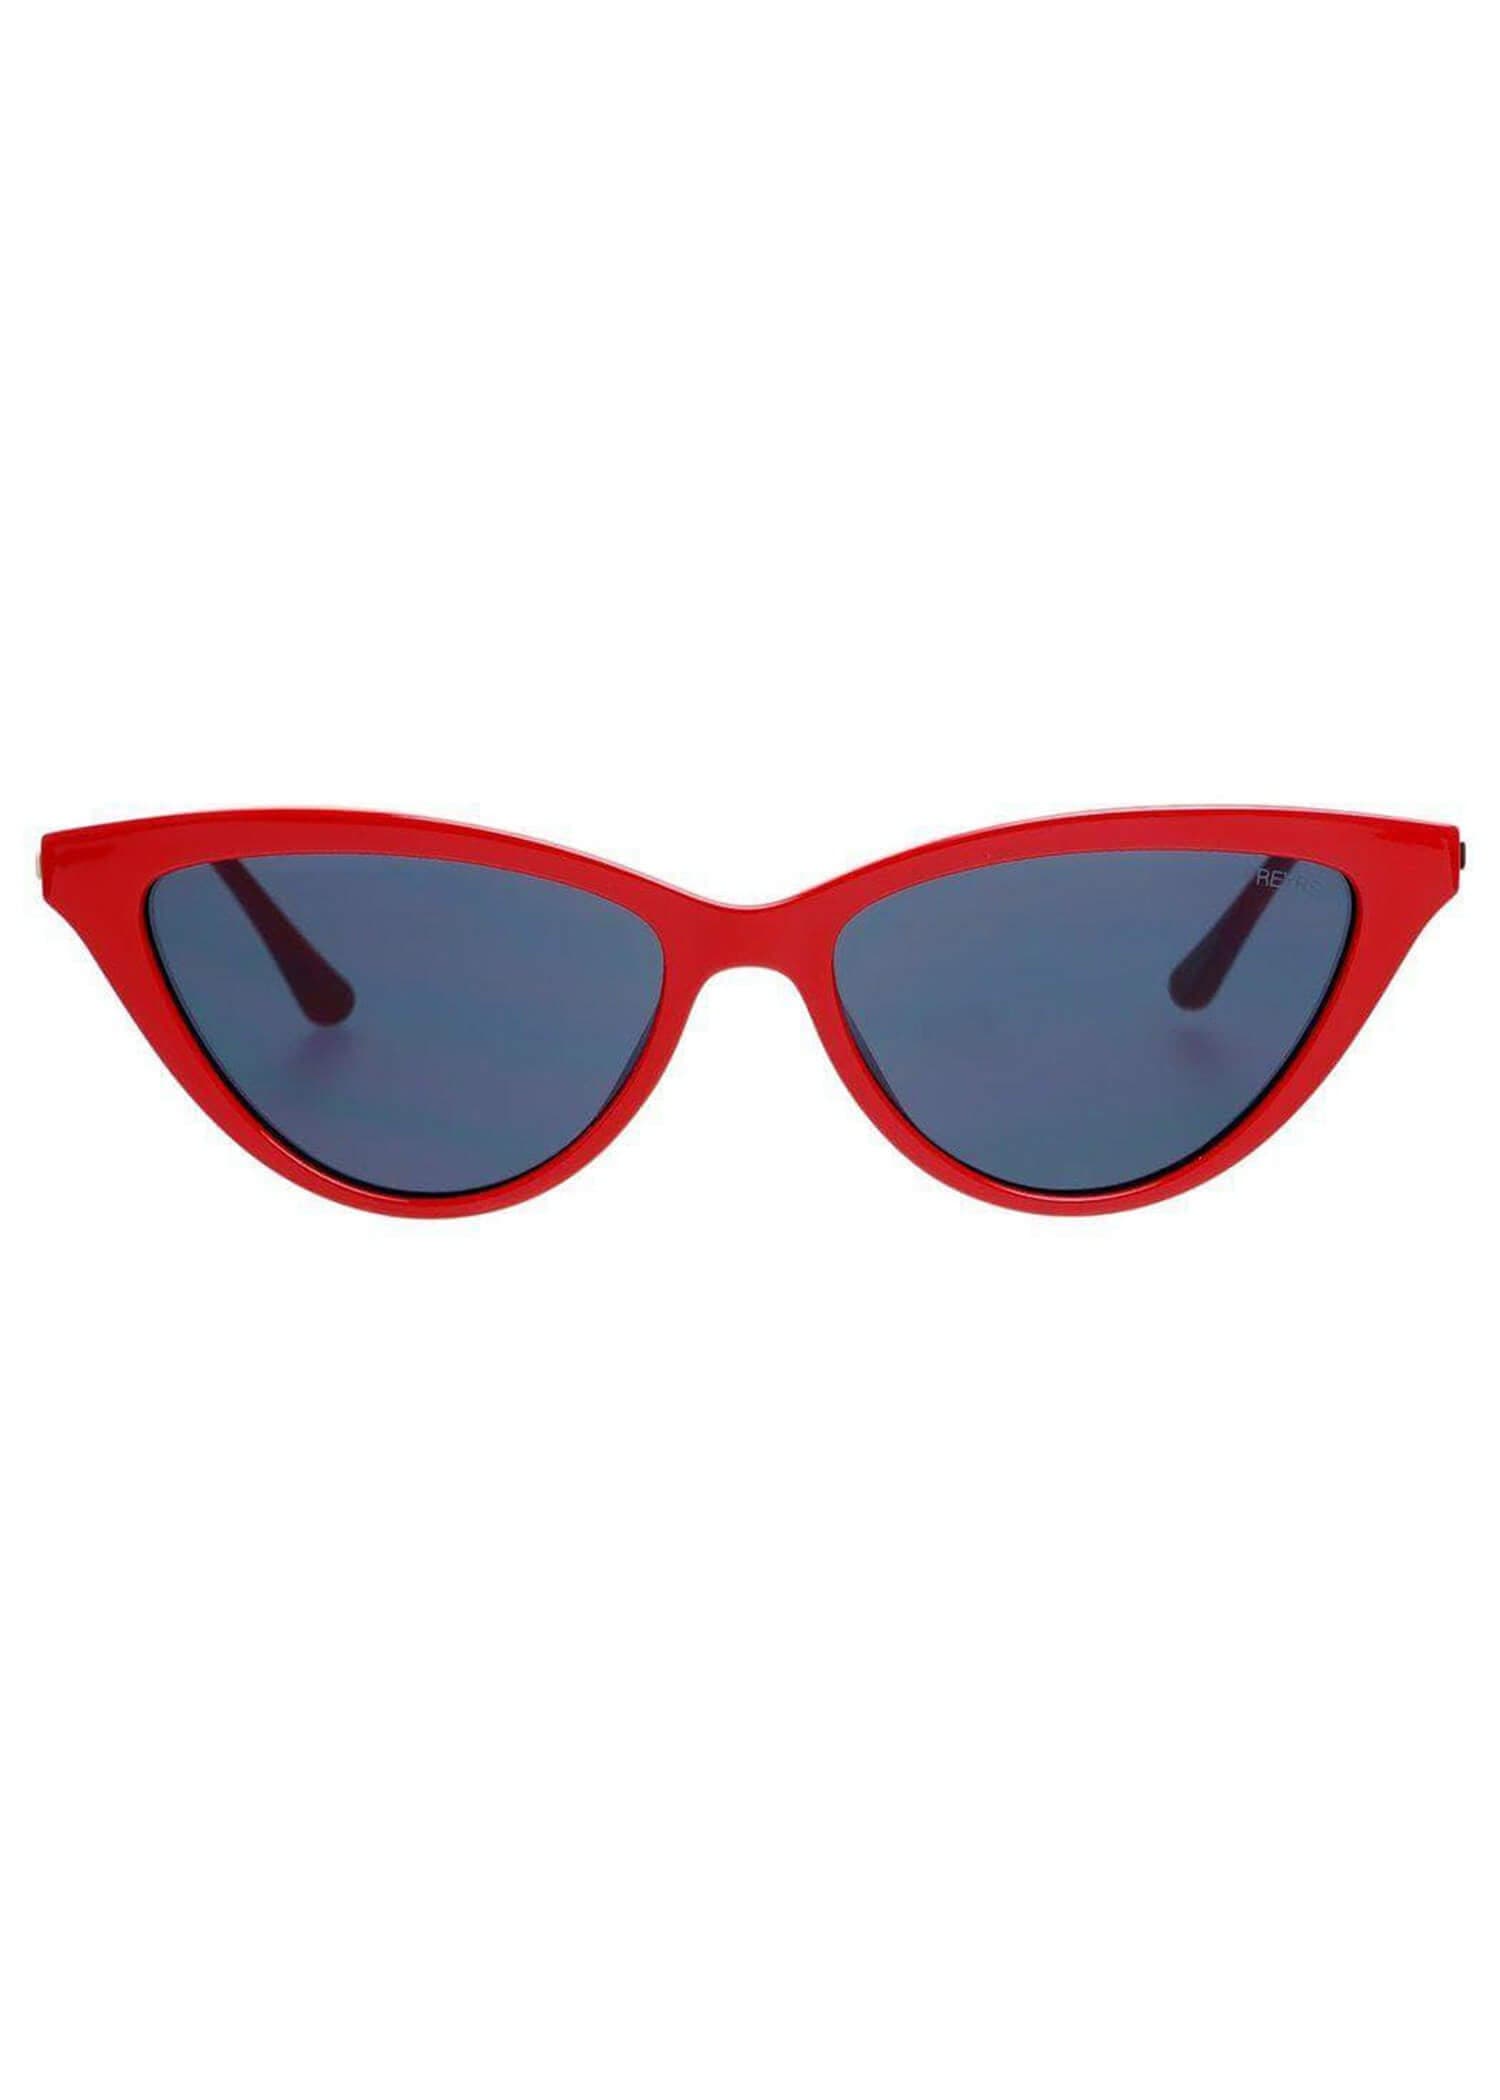 Soho Glasses - Red Sunglasses MerciGrace Boutique.